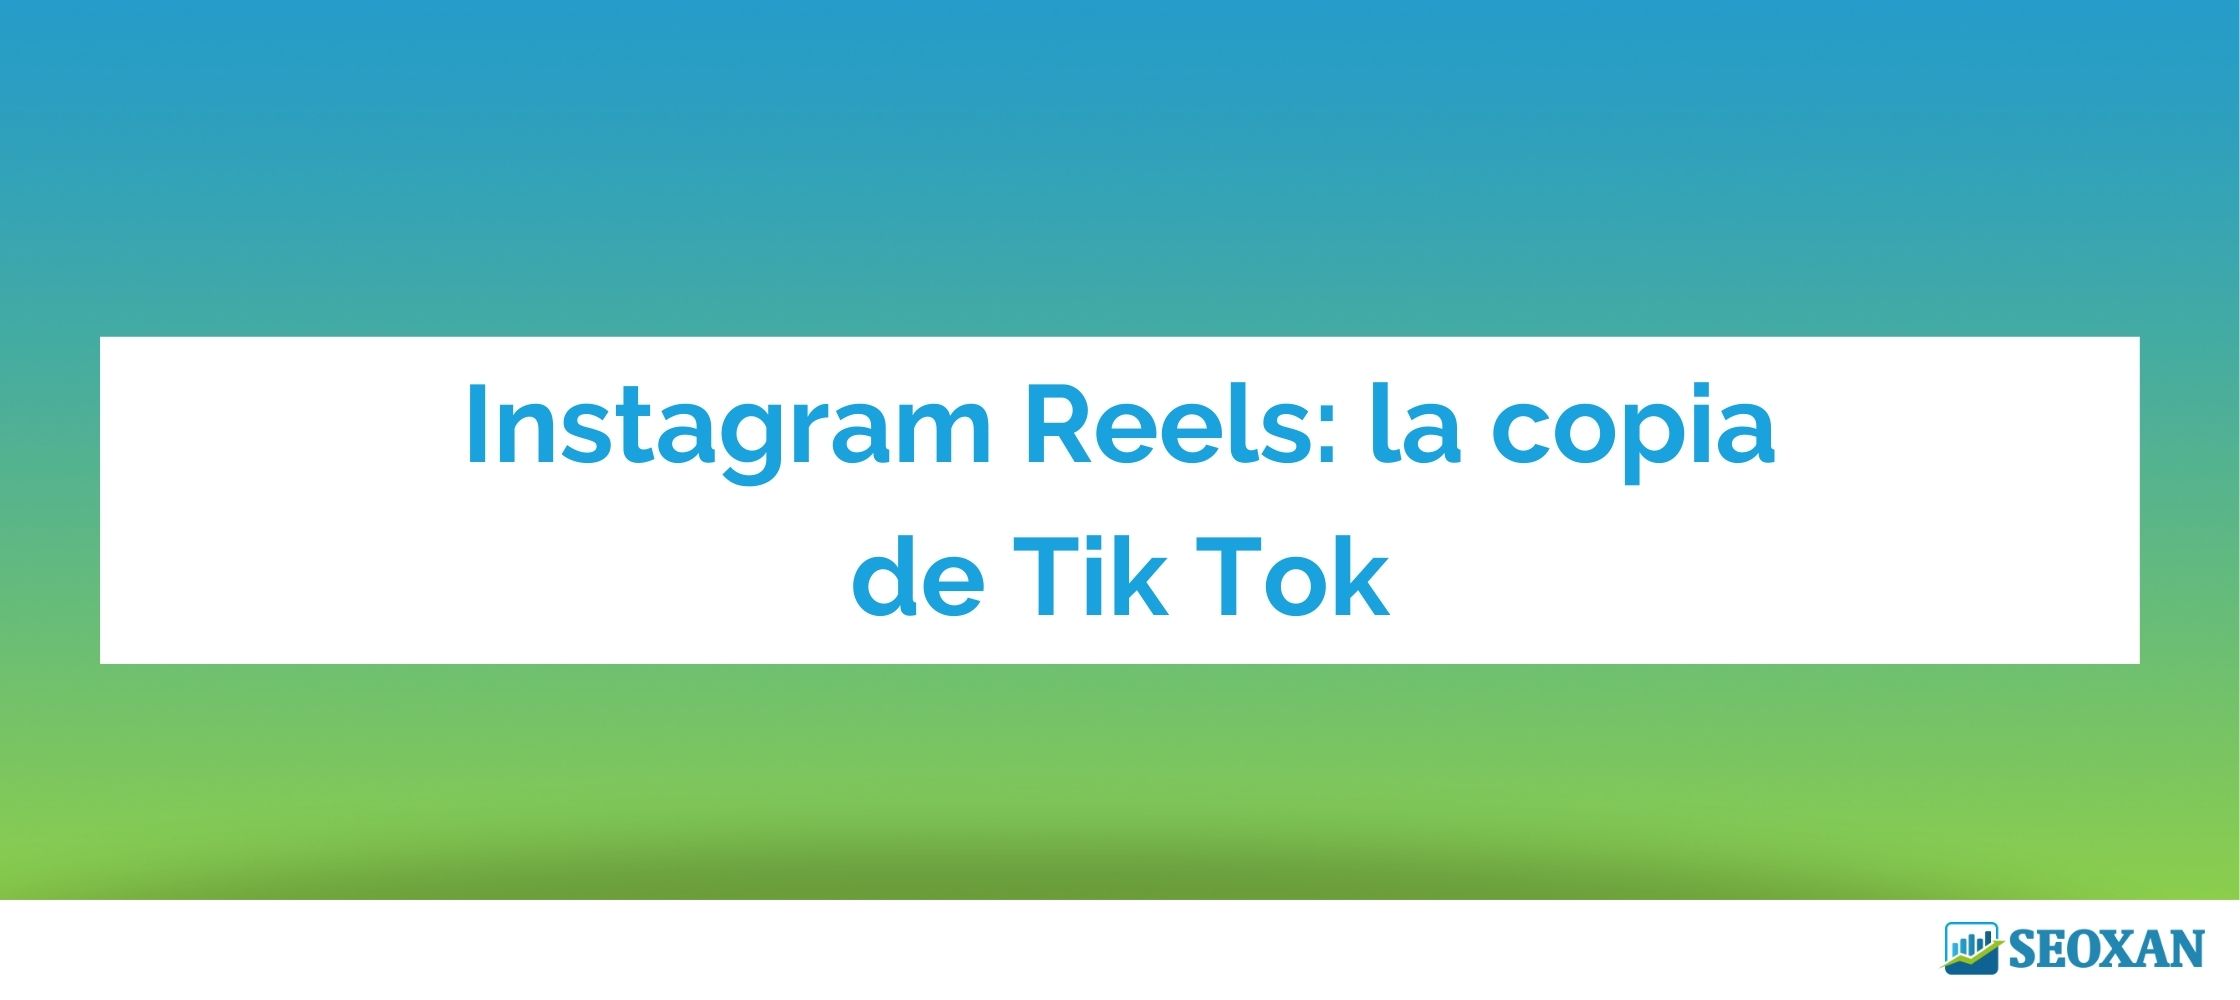 Instagram Reels: la copia de Tik Tok